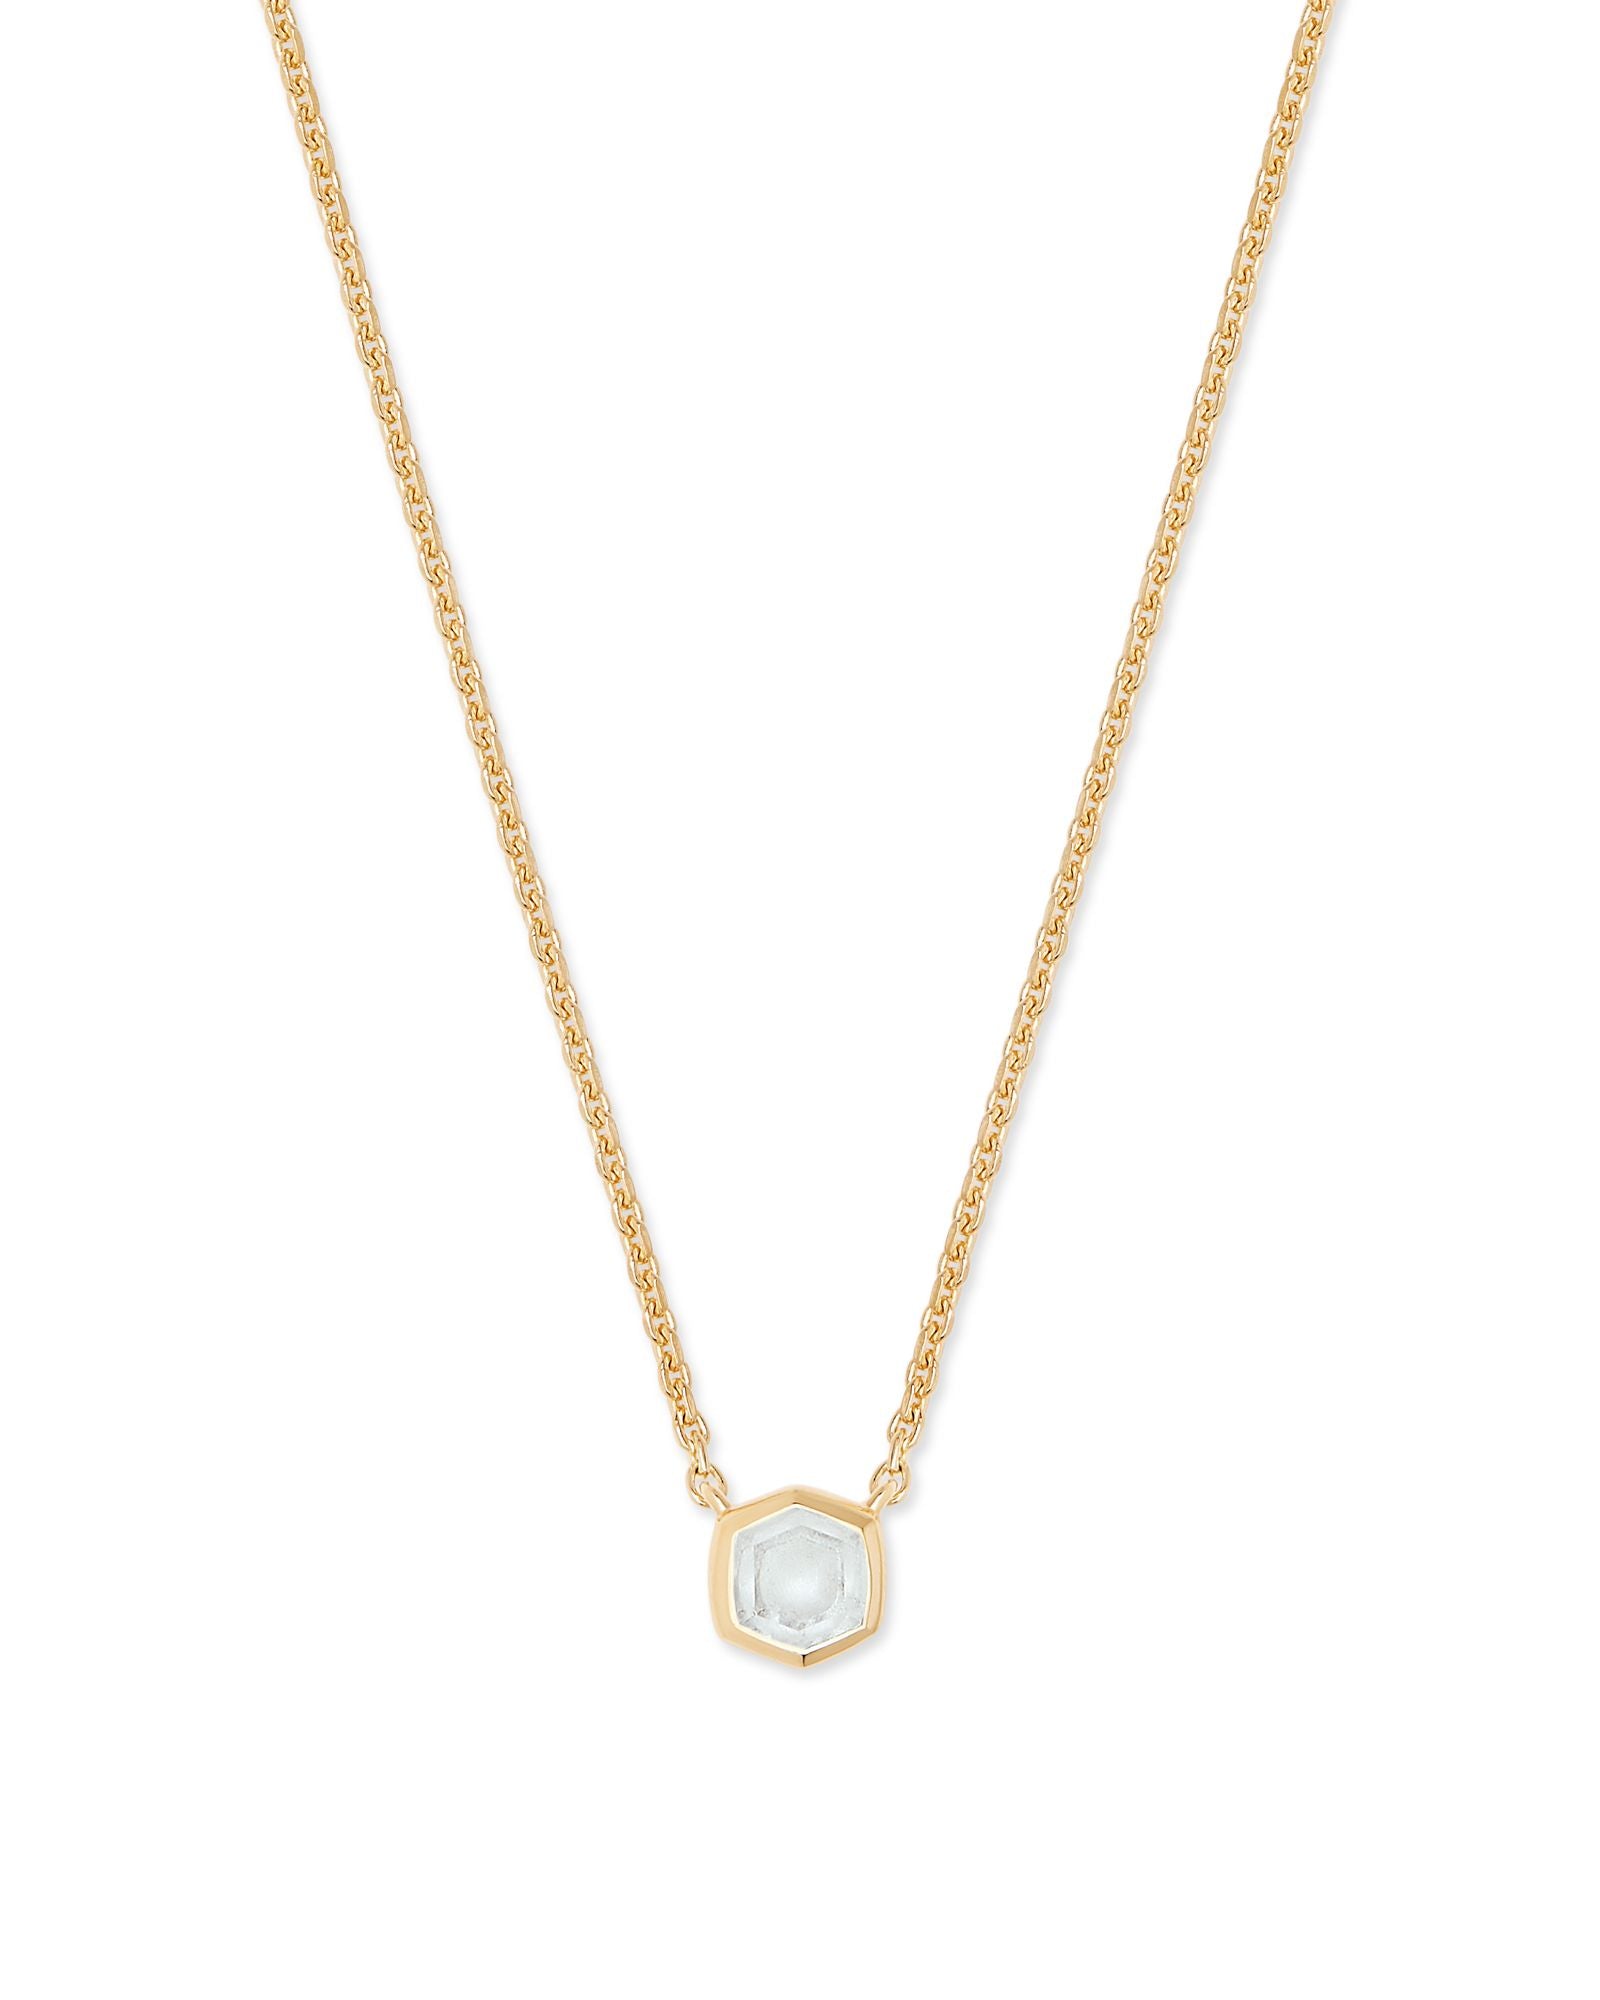 Davie Pendant Necklace in 18k Gold Vermeil Rock Crystal